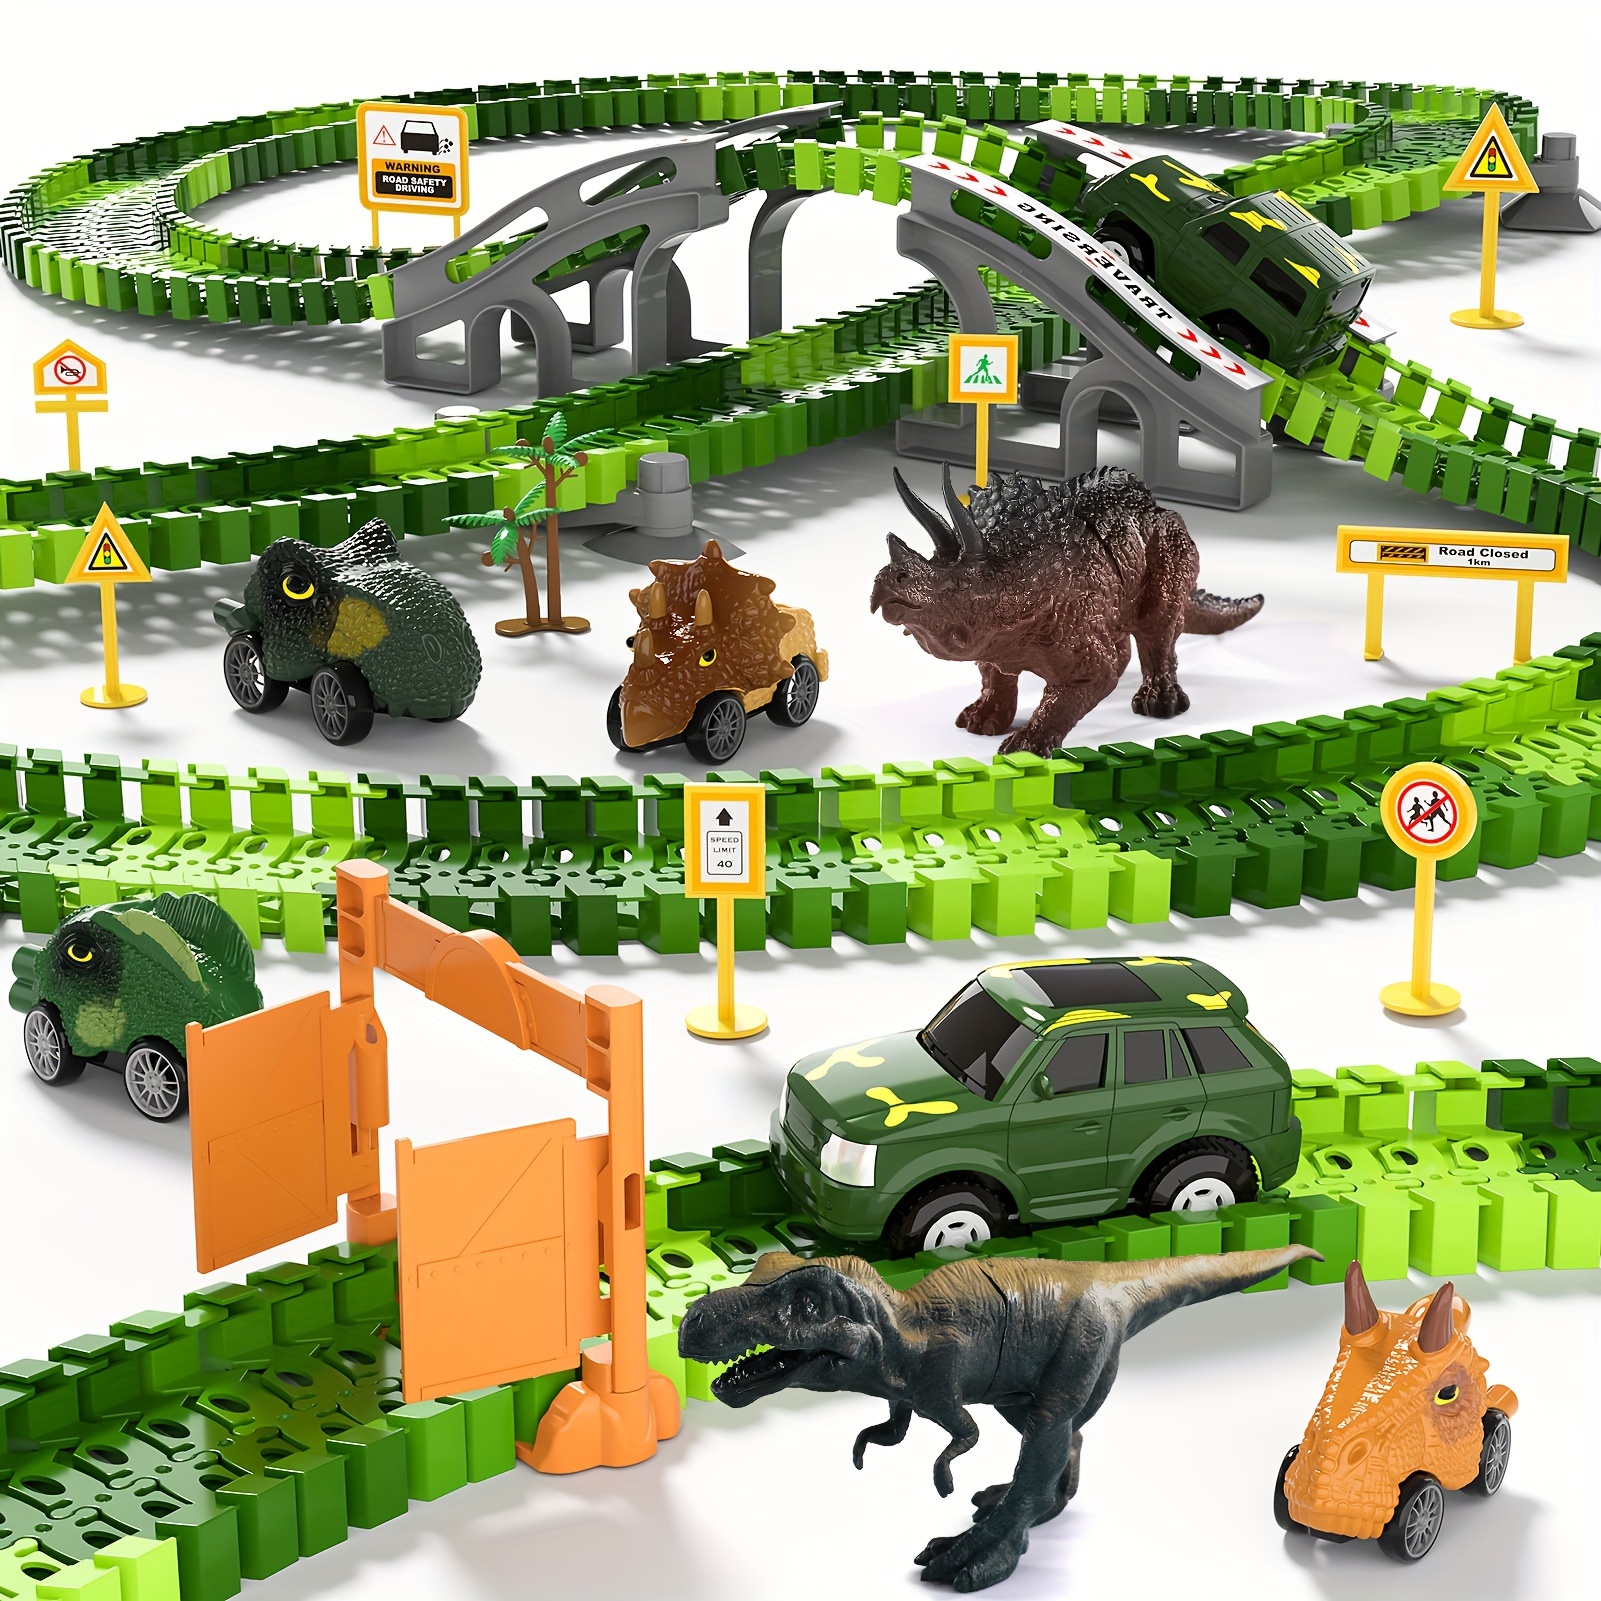 

169 Pcs Dinosaur Race Car Track Toys For Kids Toddler Boys Ages 3-5 4-7, Dinosaur Race Tracks Toys For Kids Boys